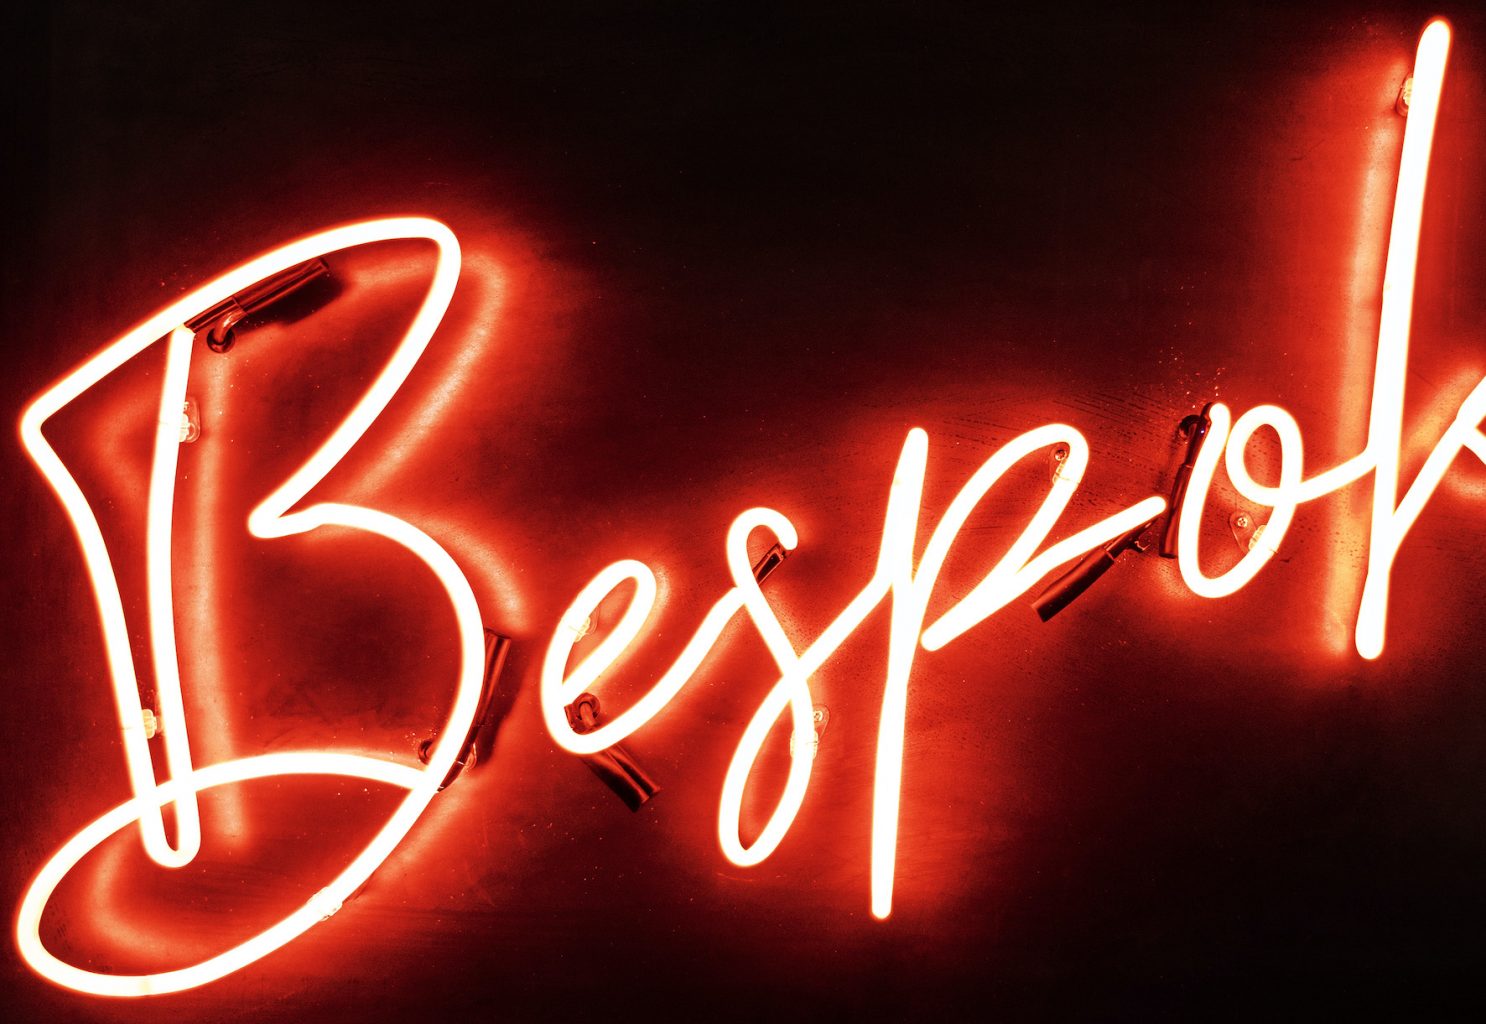 Louis Vuitton - Kemp London - Bespoke neon signs, prop hire, large